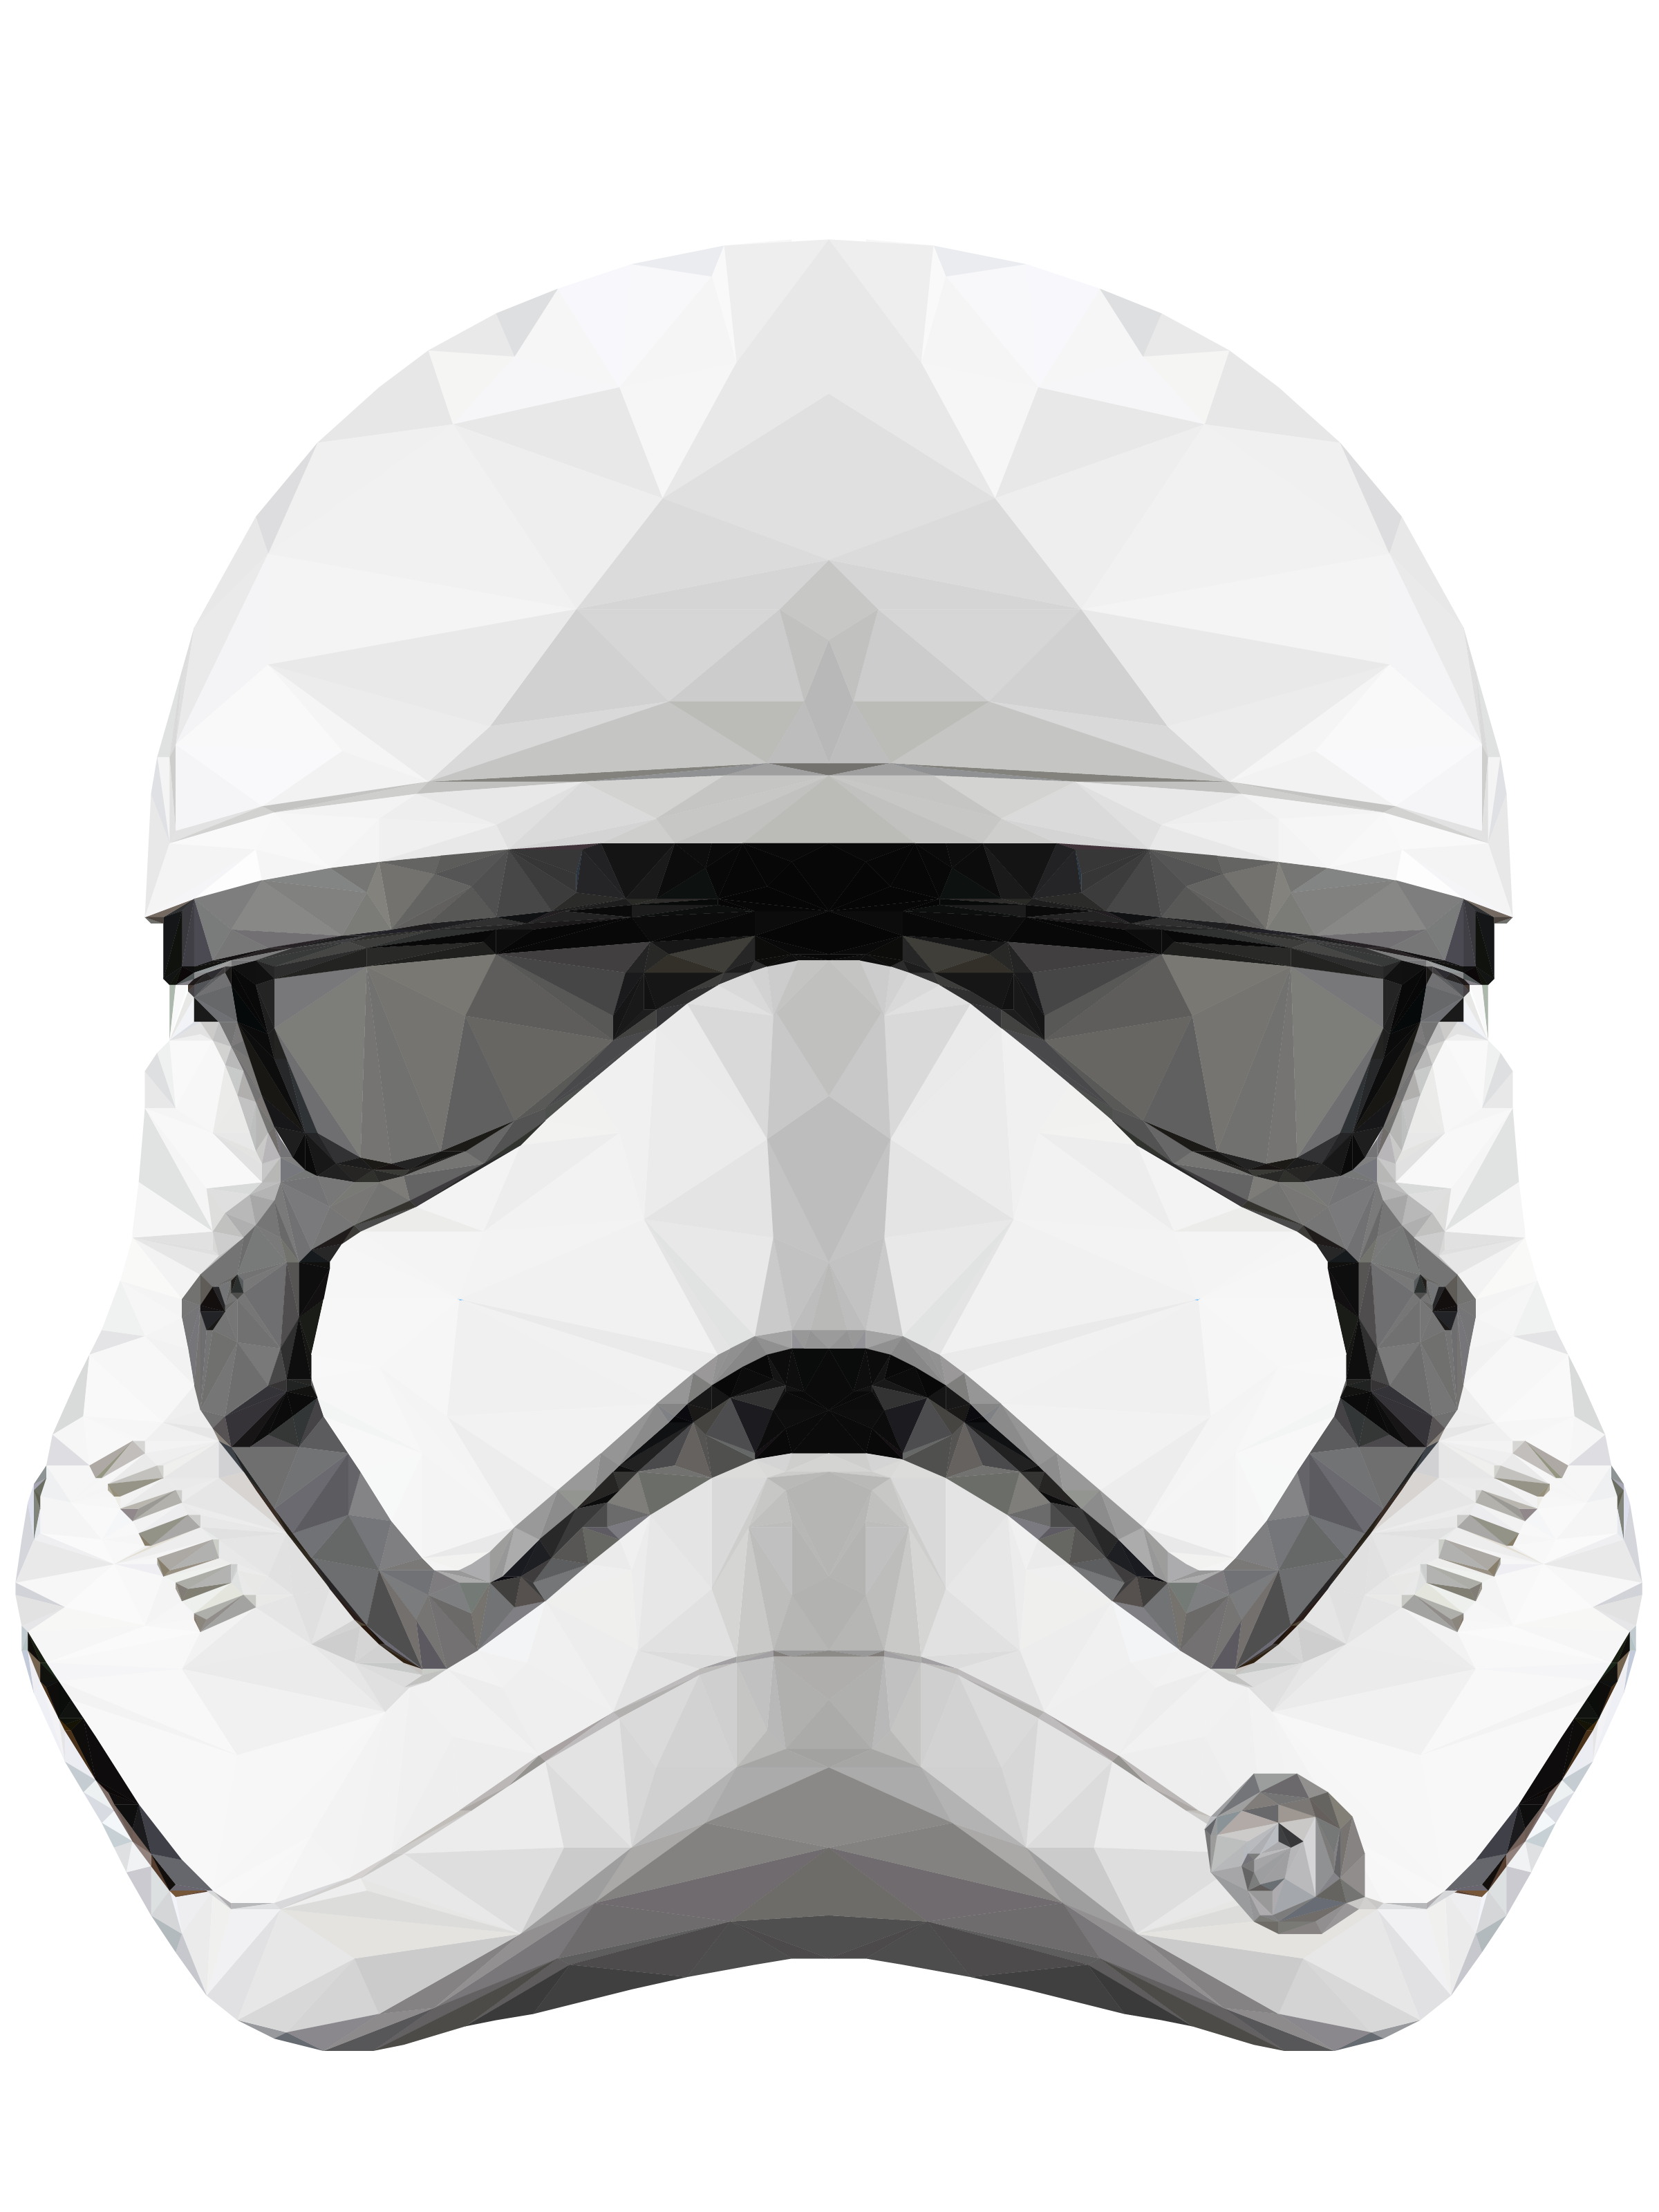 Stormtrooper Mask Free HQ Image PNG Image